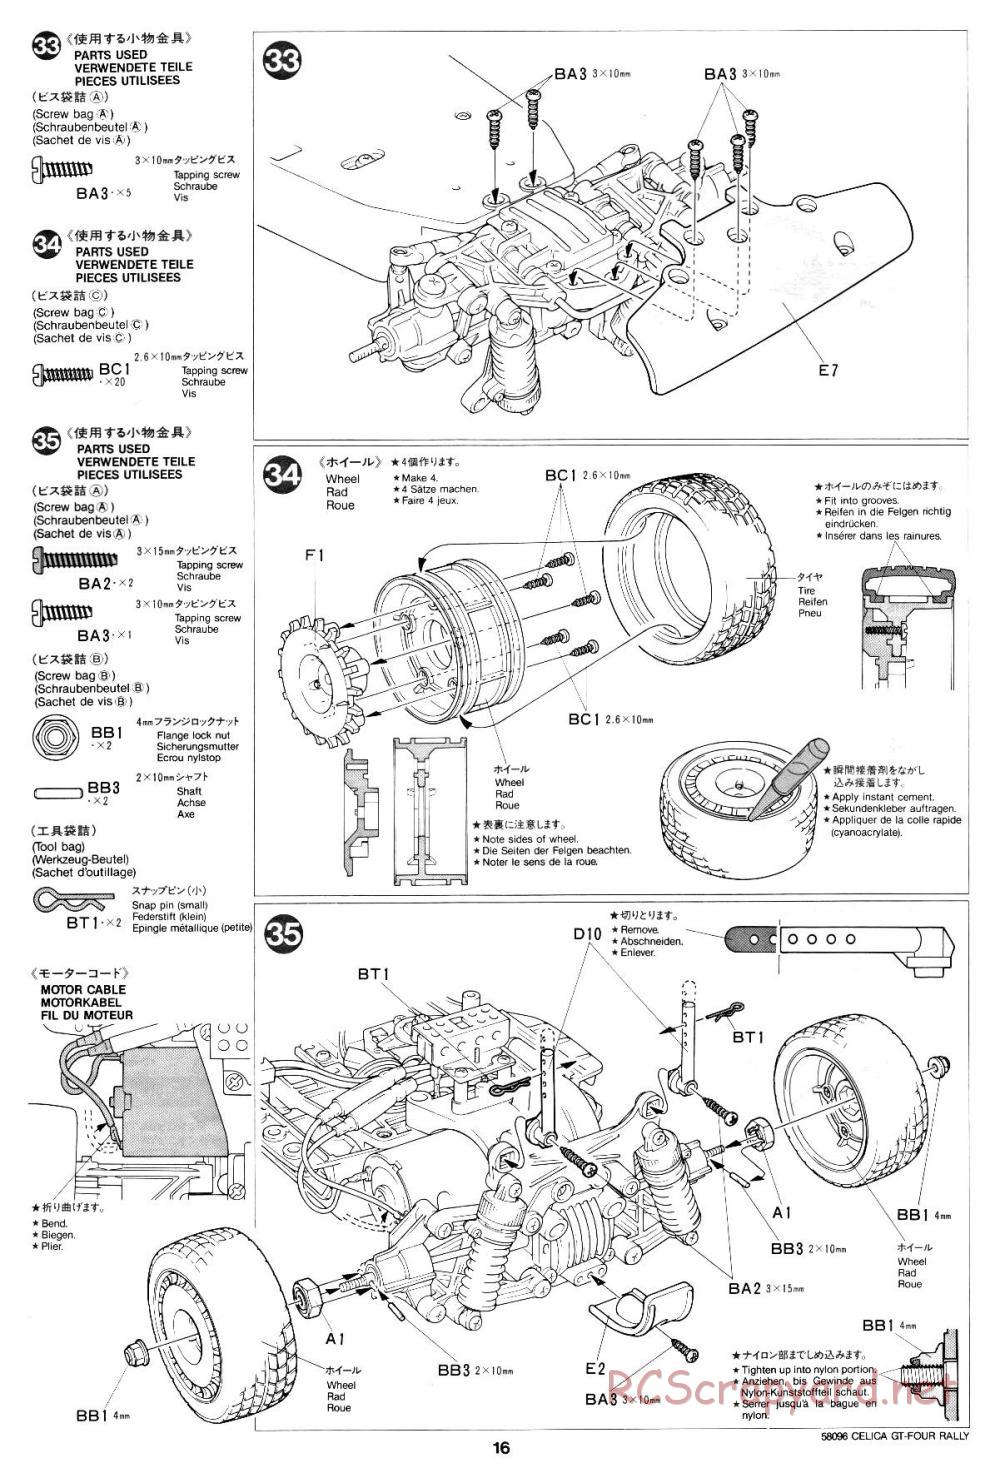 Tamiya - Toyota Celica GT-Four Rally - 58096 - Manual - Page 16